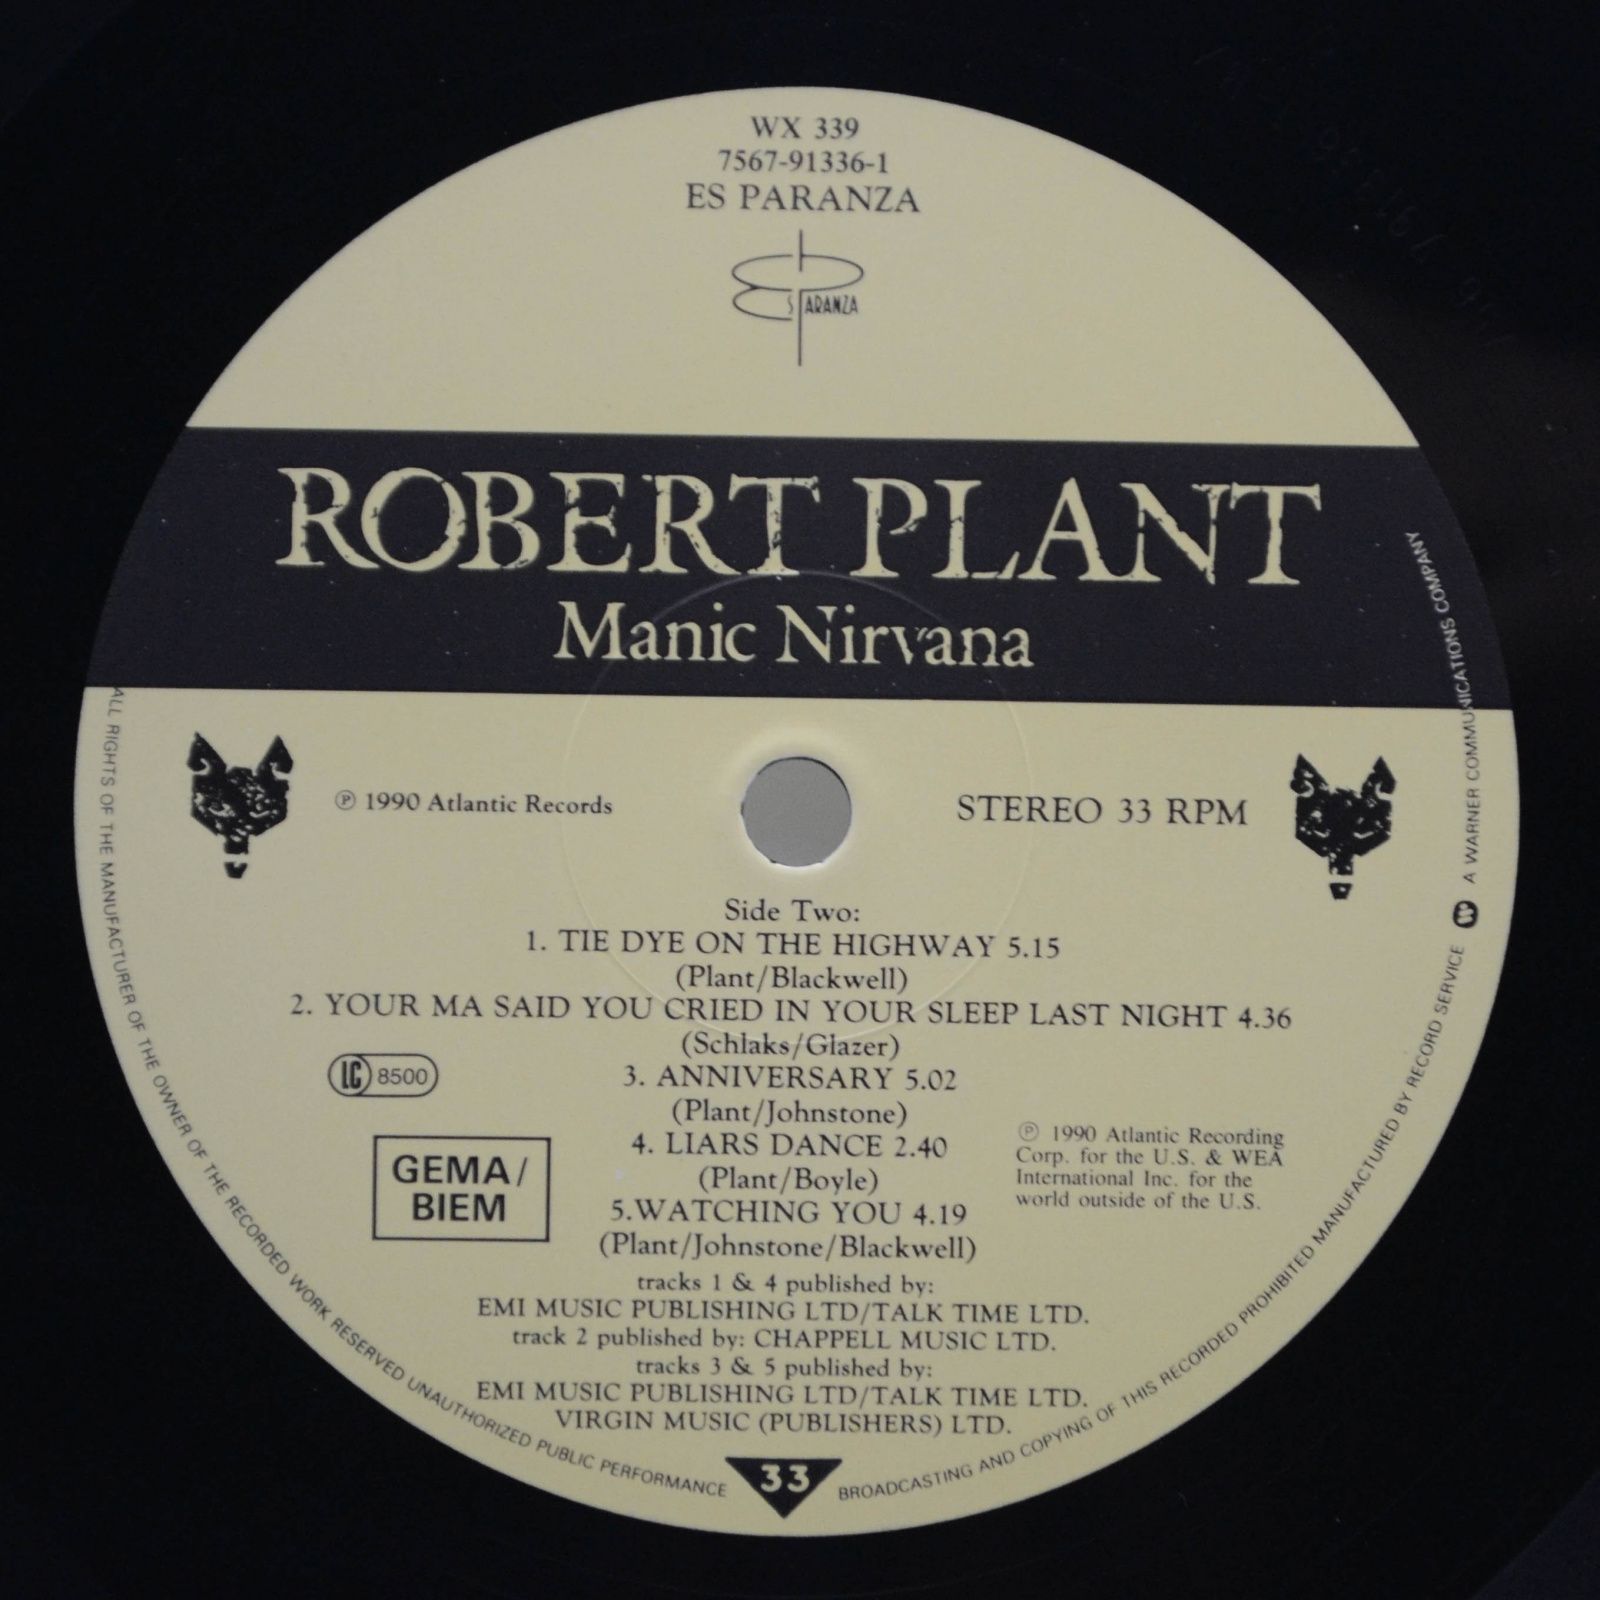 Robert Plant — Manic Nirvana, 1990